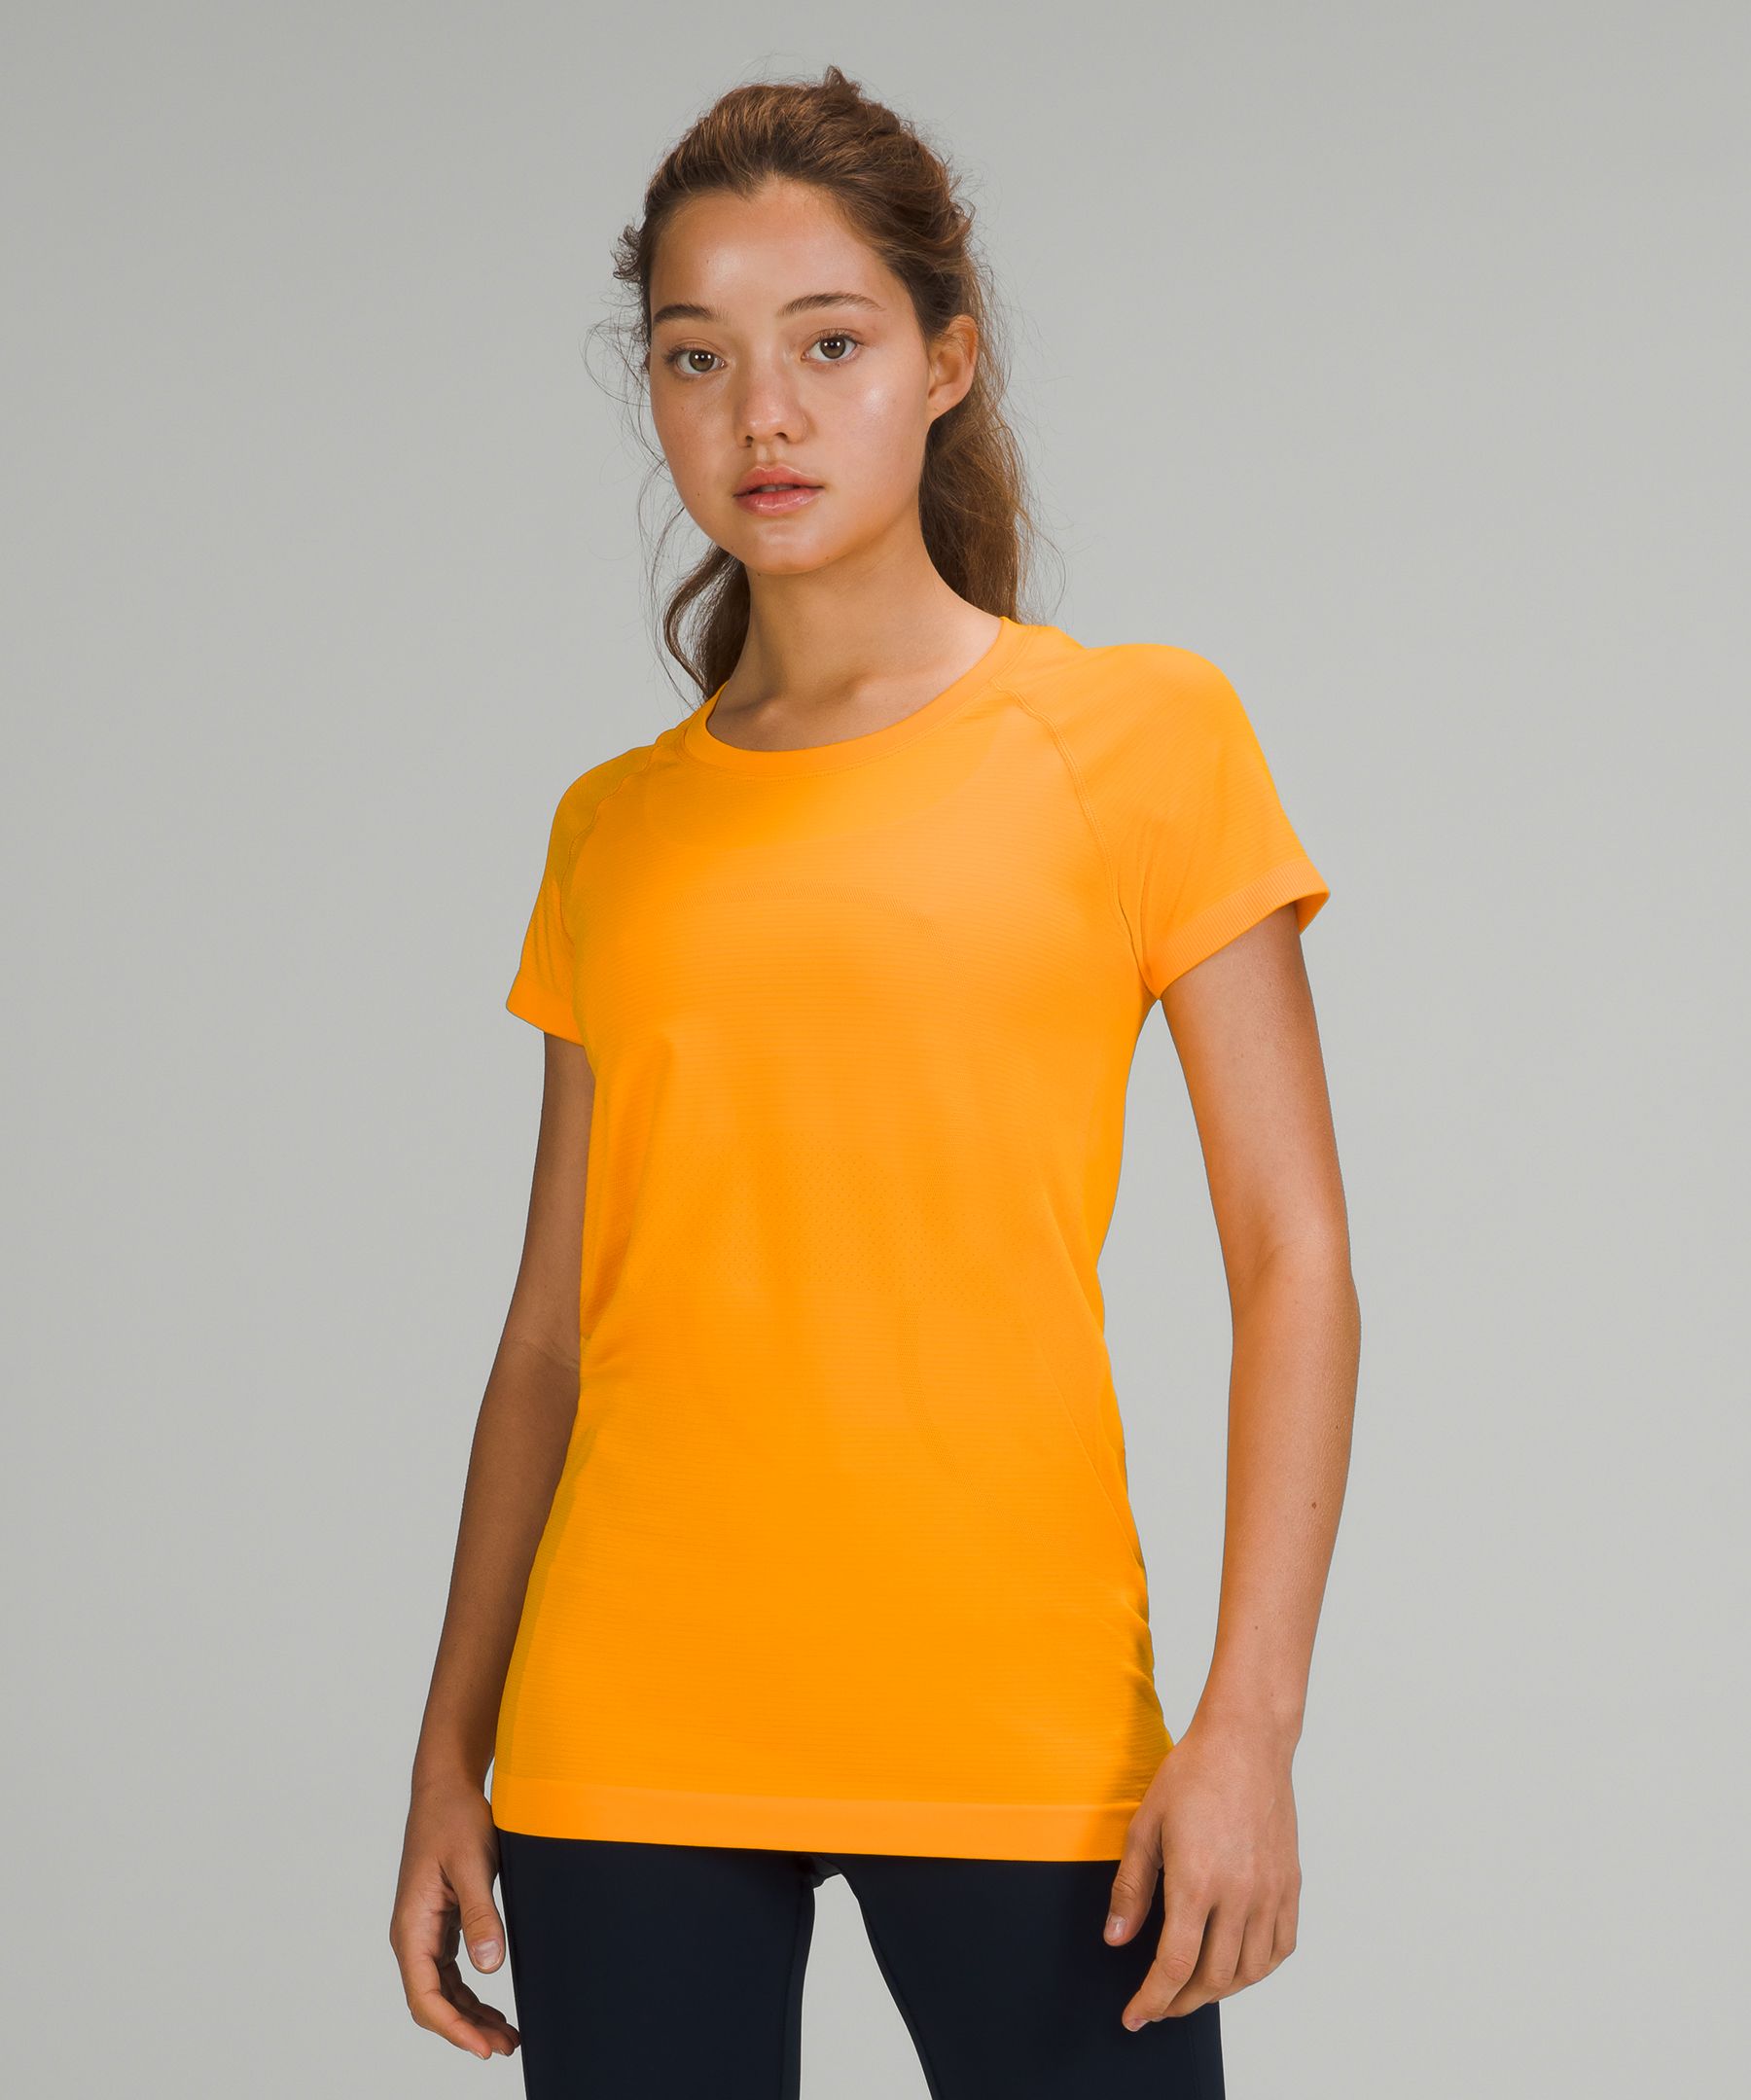 Lululemon Swiftly Tech Short Sleeve Shirt 2.0 In Orange